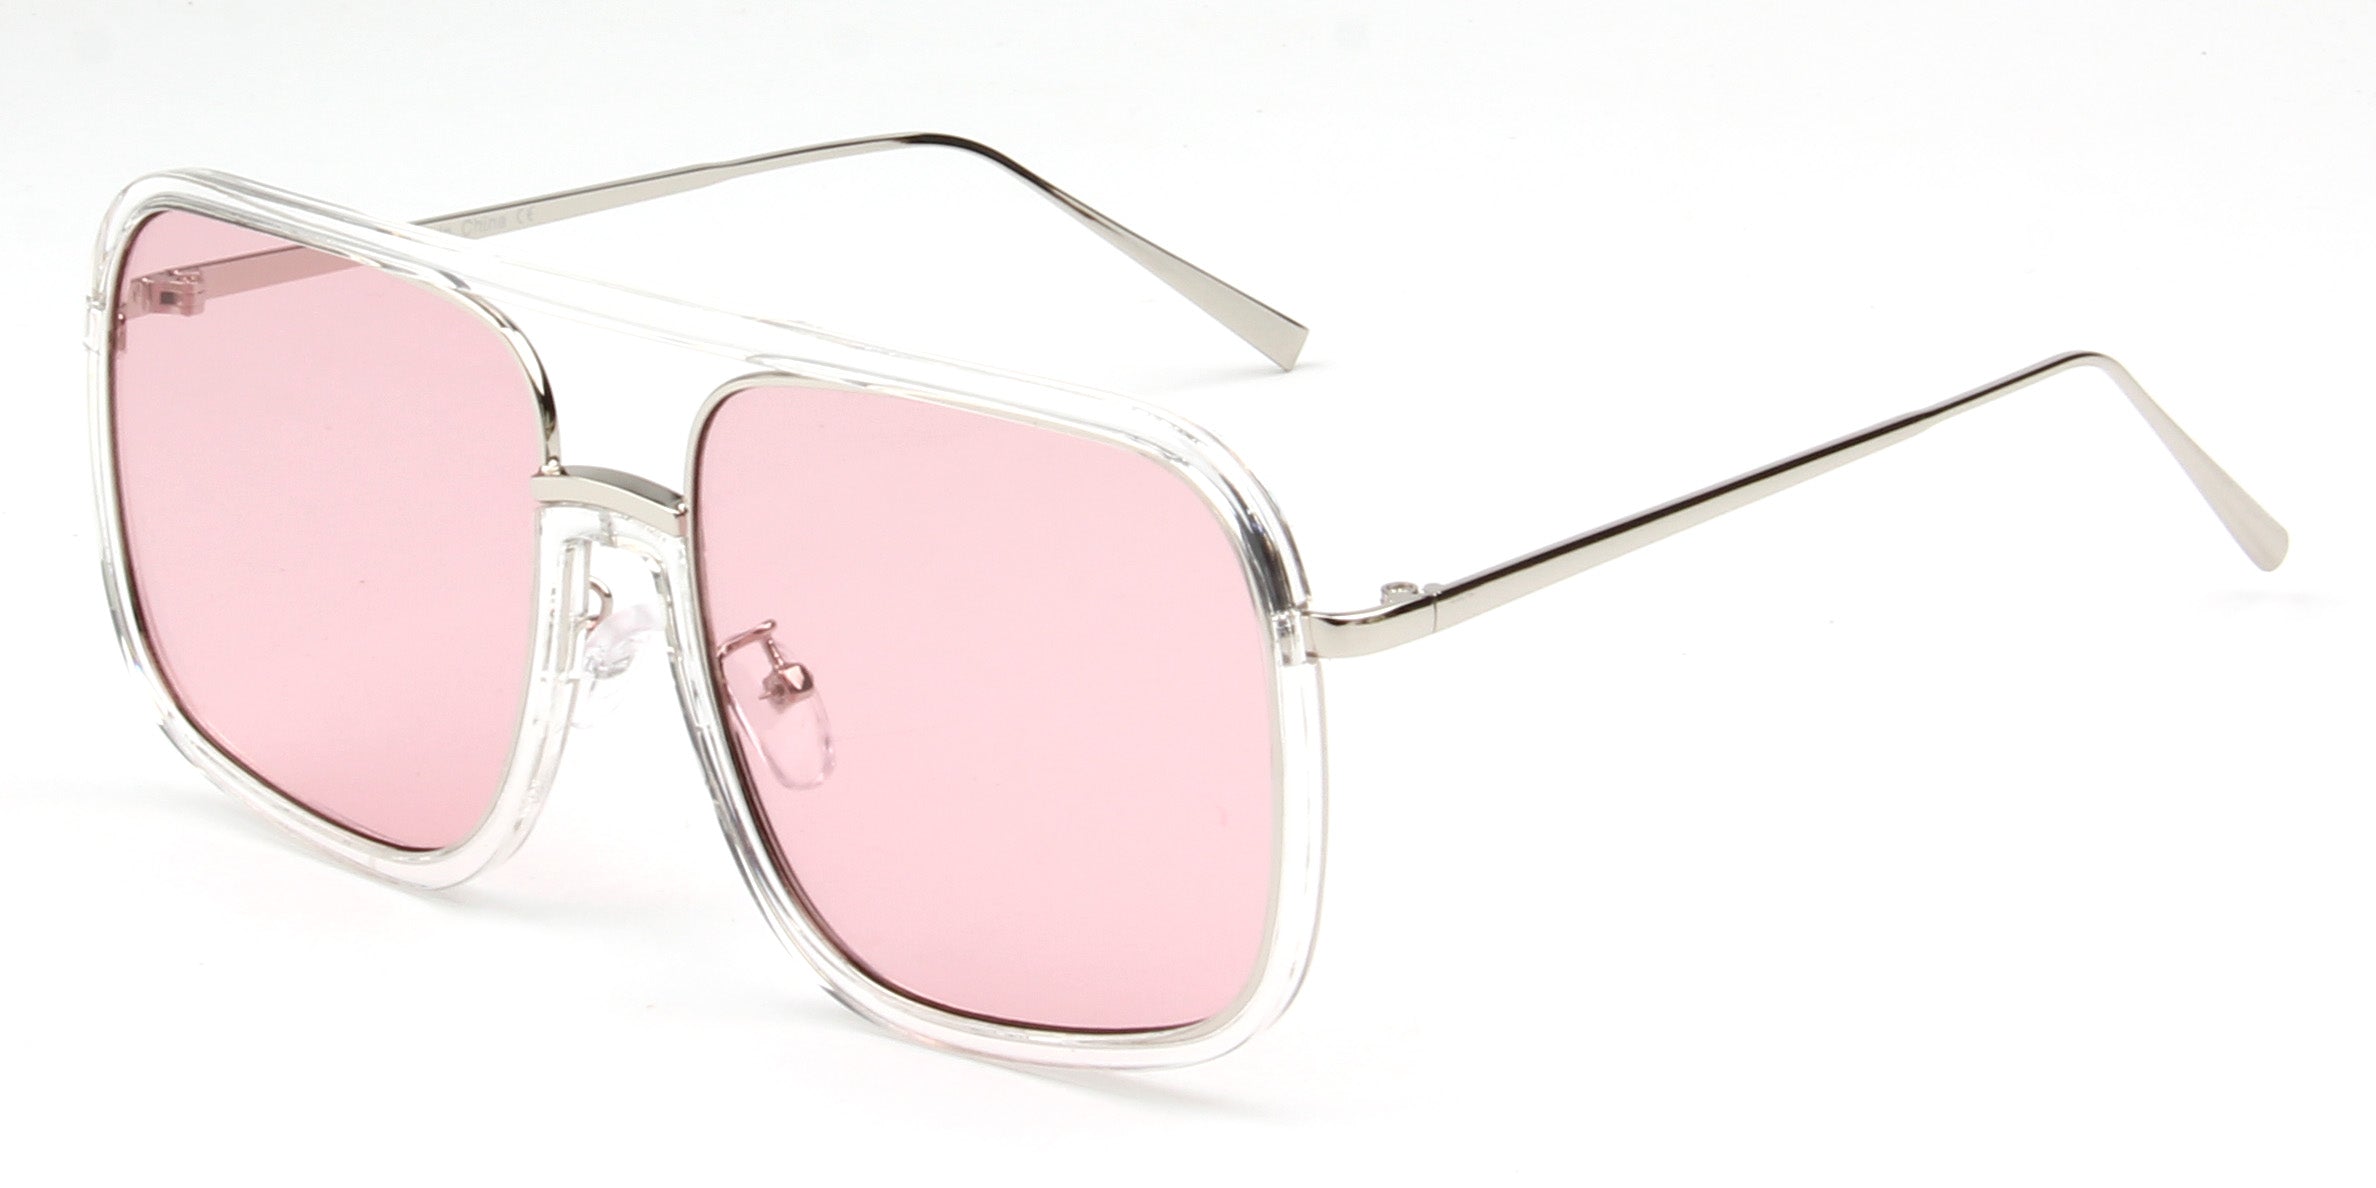 S3004 - Oversize Square Fashion Sunglasses Pink